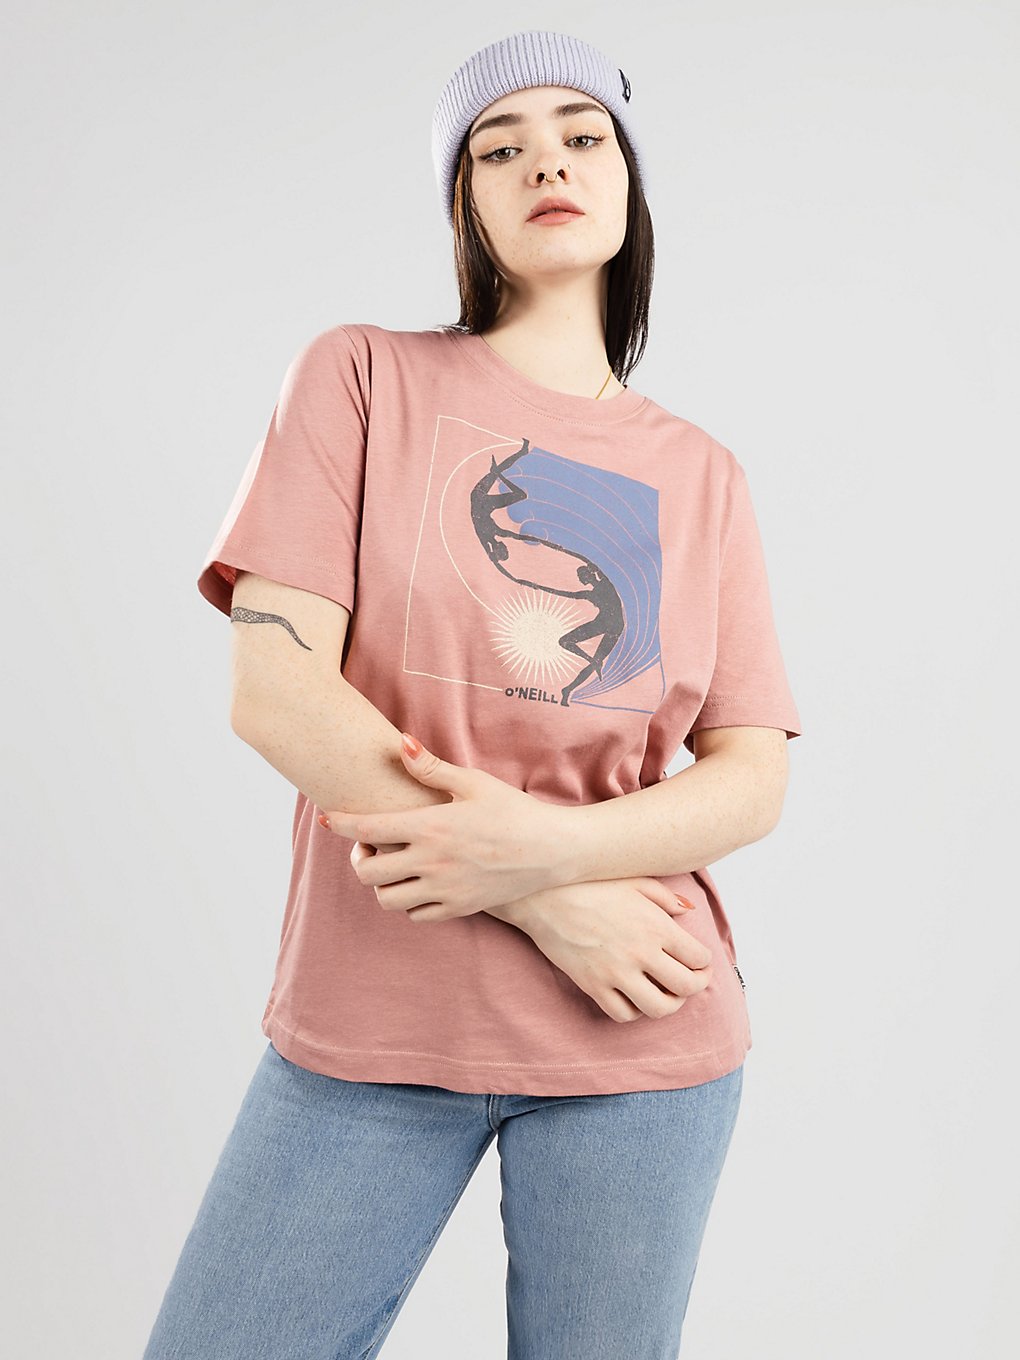 O'Neill Allora Graphic T-Shirt ash rose kaufen